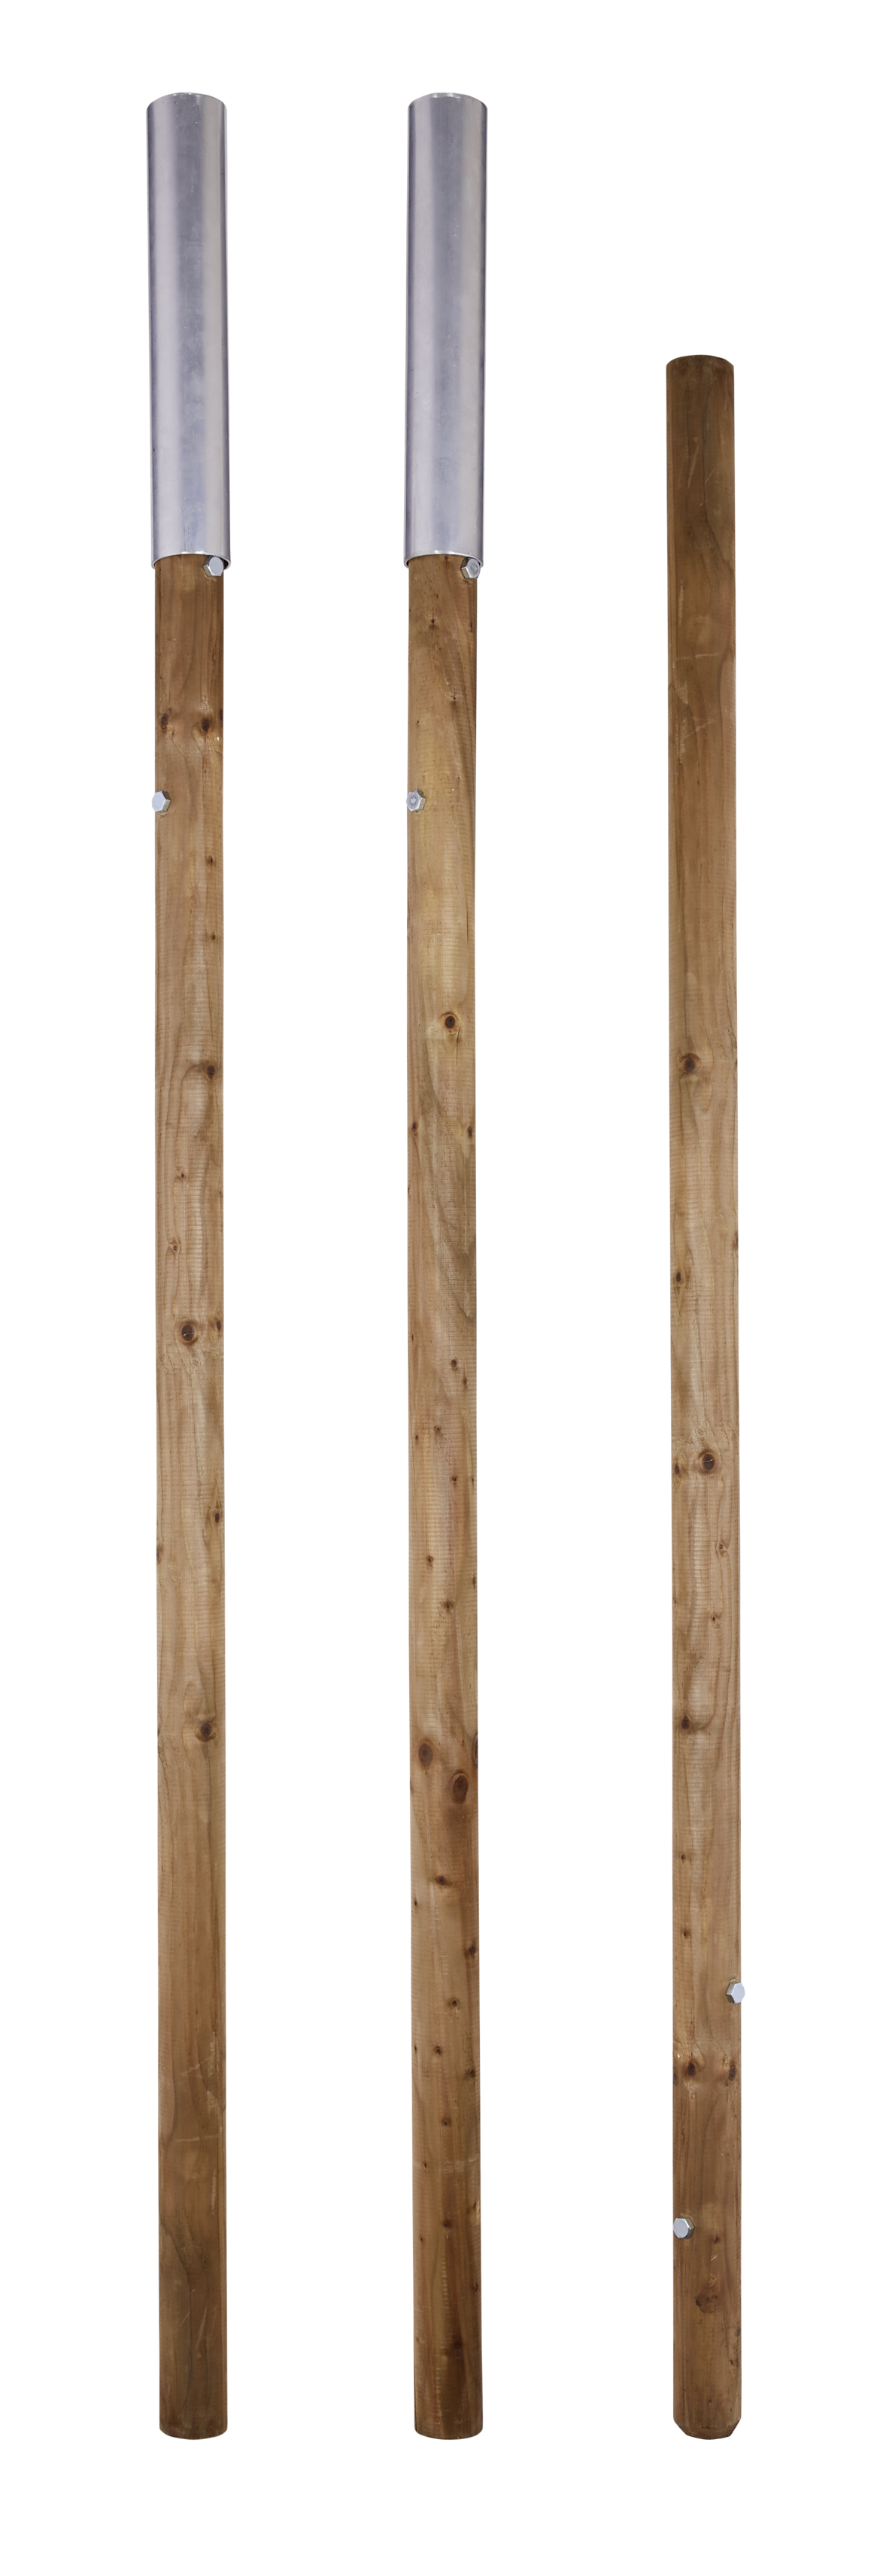 Kohten- und Jurten-Zeltstange Holz 3tlg. 5,40 m Alu Hülse